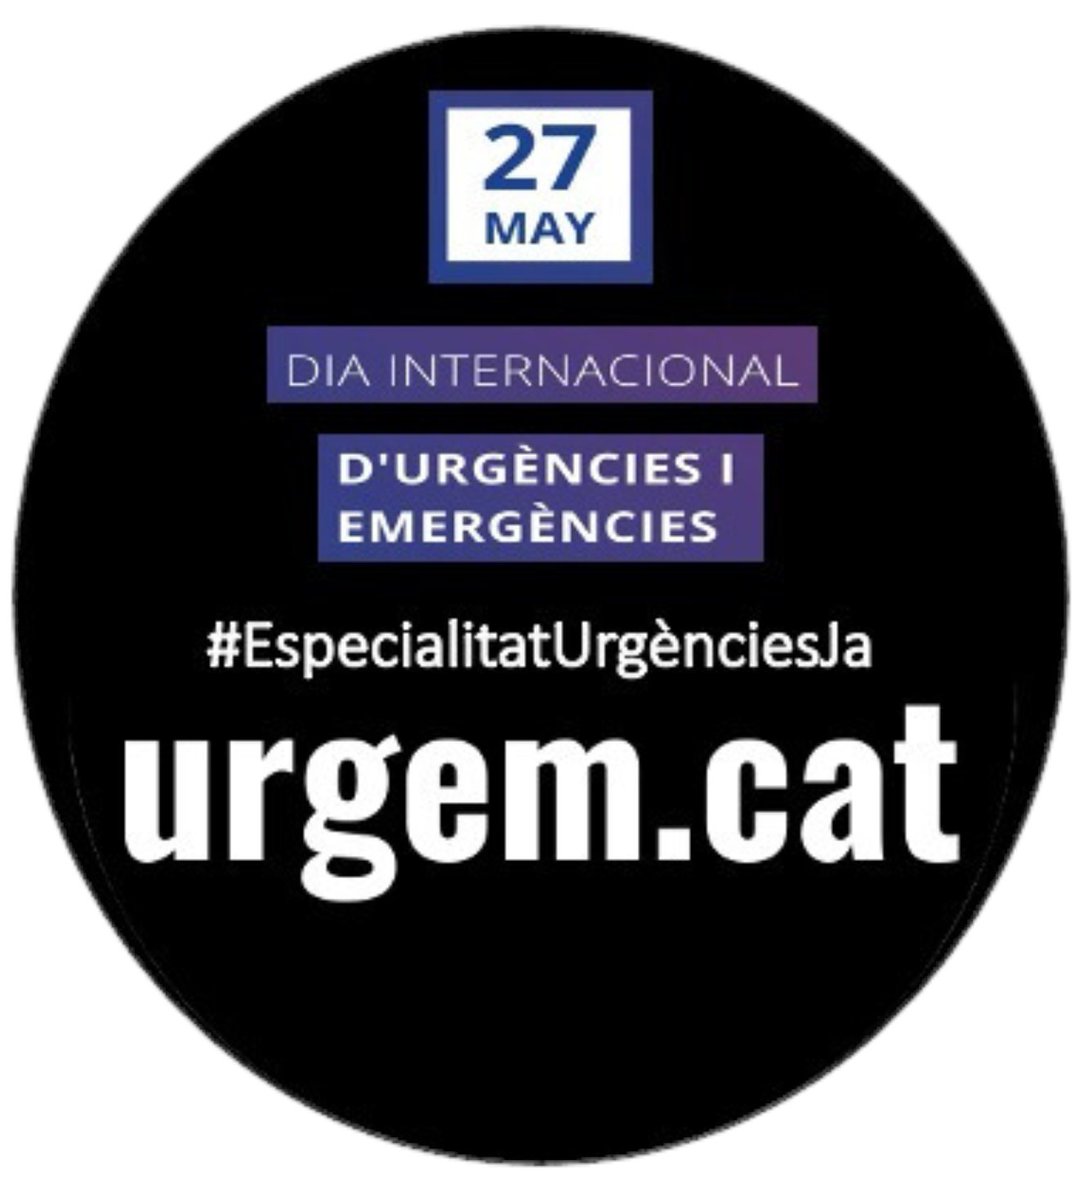 #EmergencyMedicineDay #27May
@EmpodCat  @SoCMUE 
Felicitem-nos !!!!